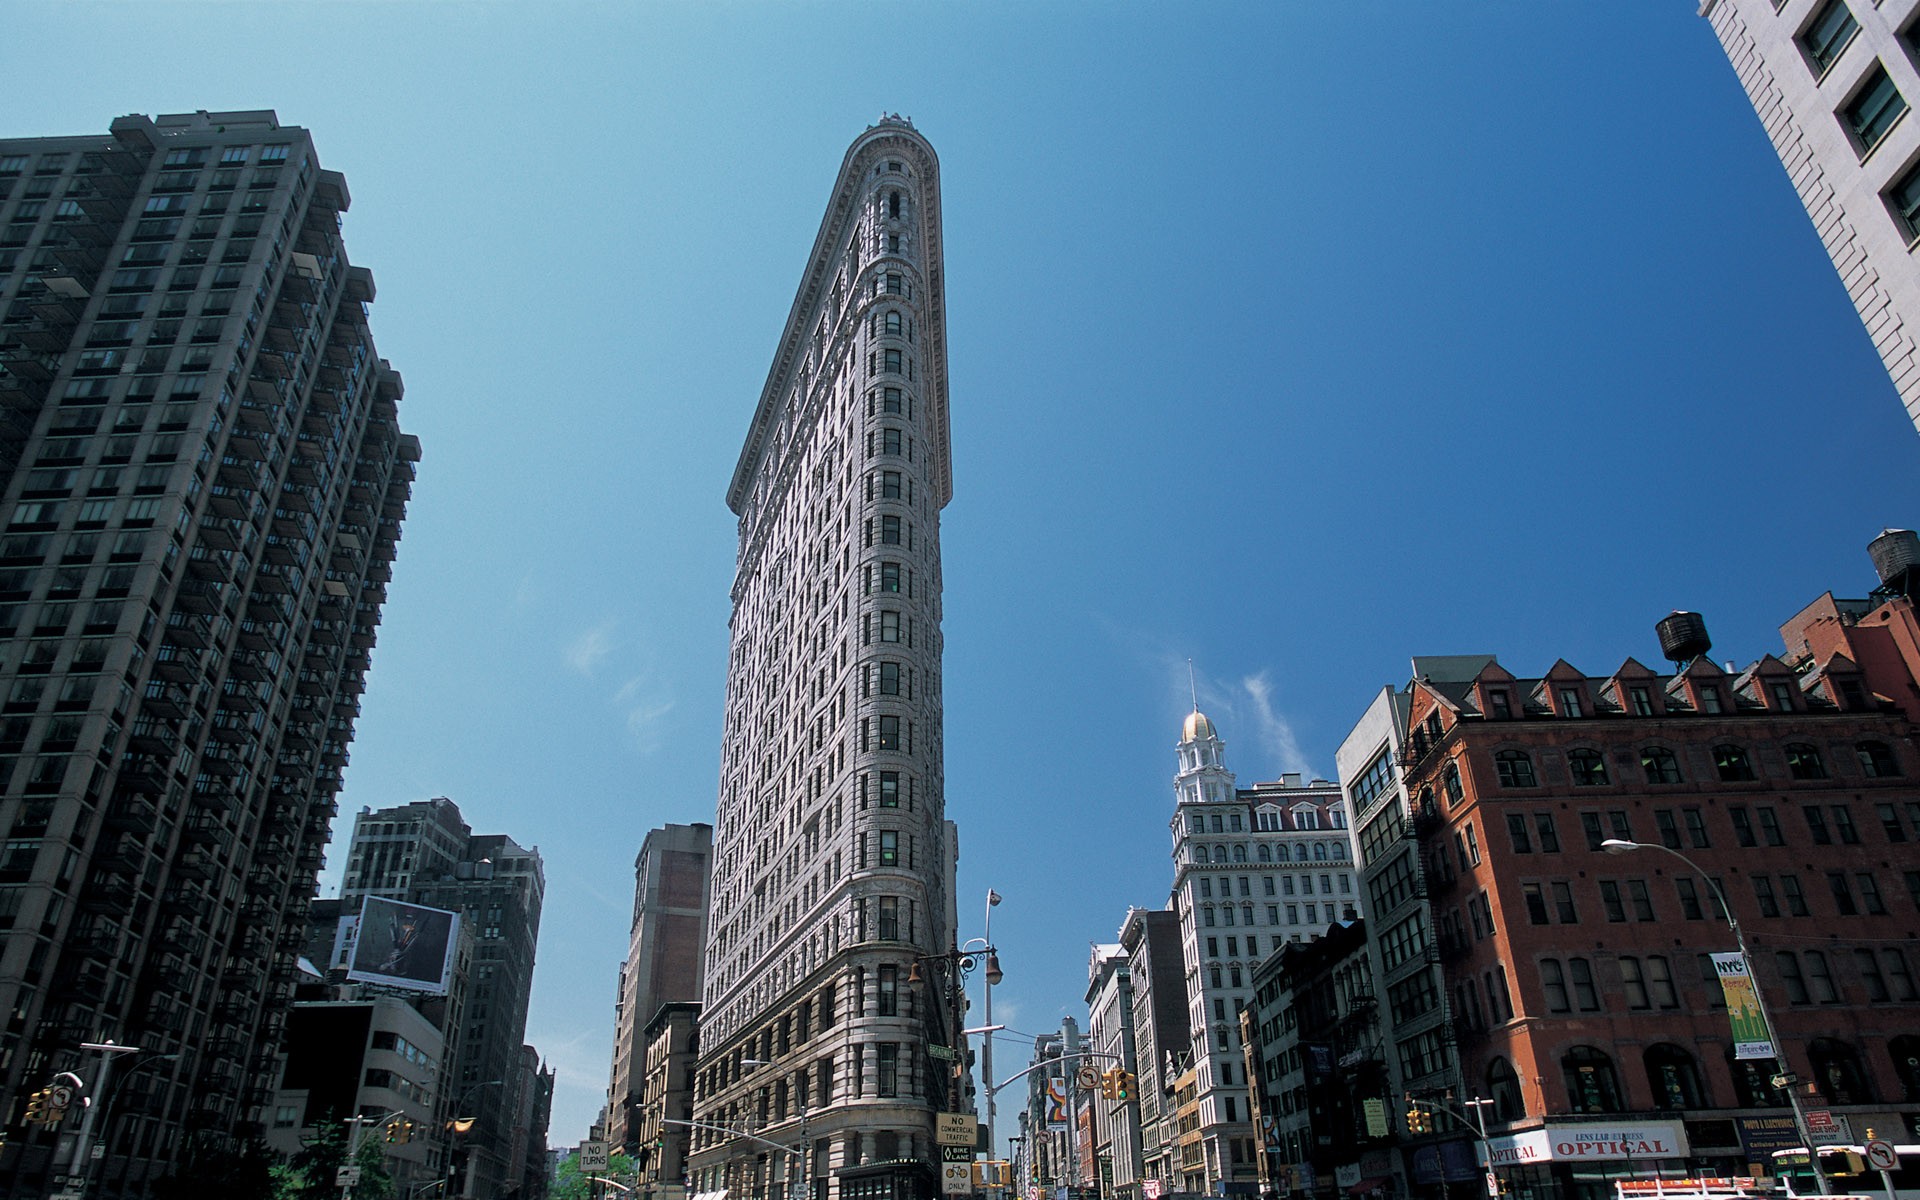 Quirligen Stadt New York Building #8 - 1920x1200